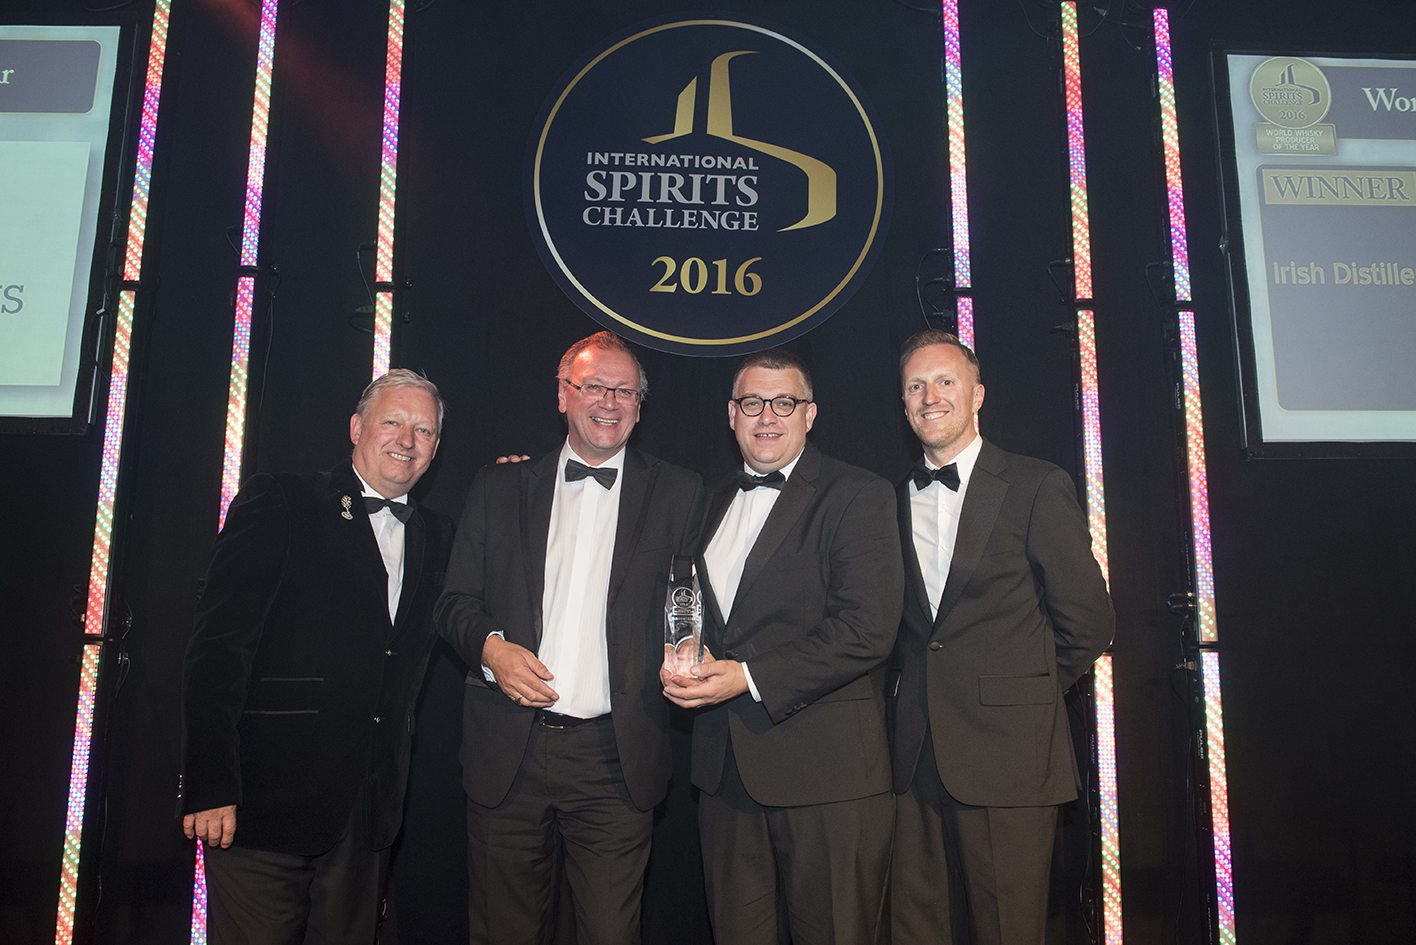 International Spirits Challenge Irish distiller wins prestigious award